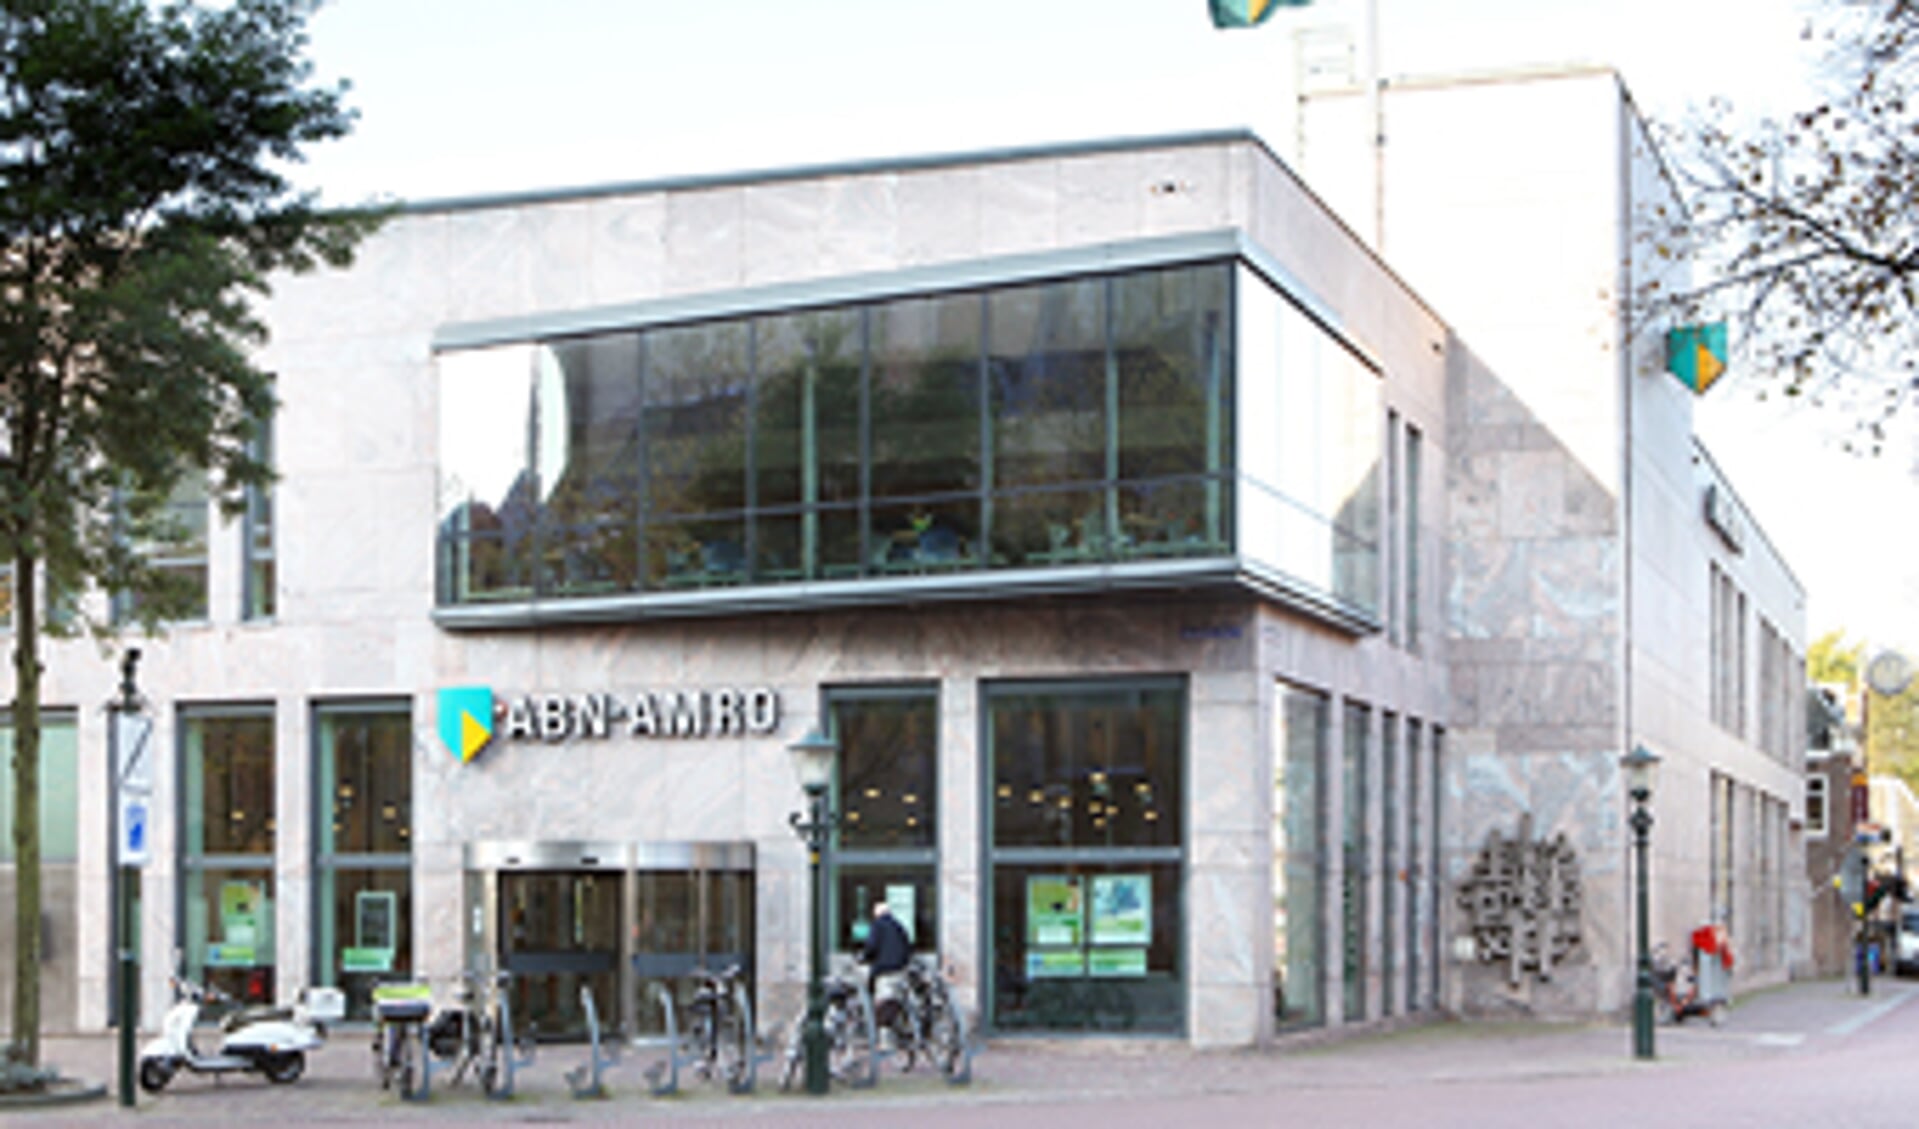 ABN-AMRO gebouw in Alkmaar.